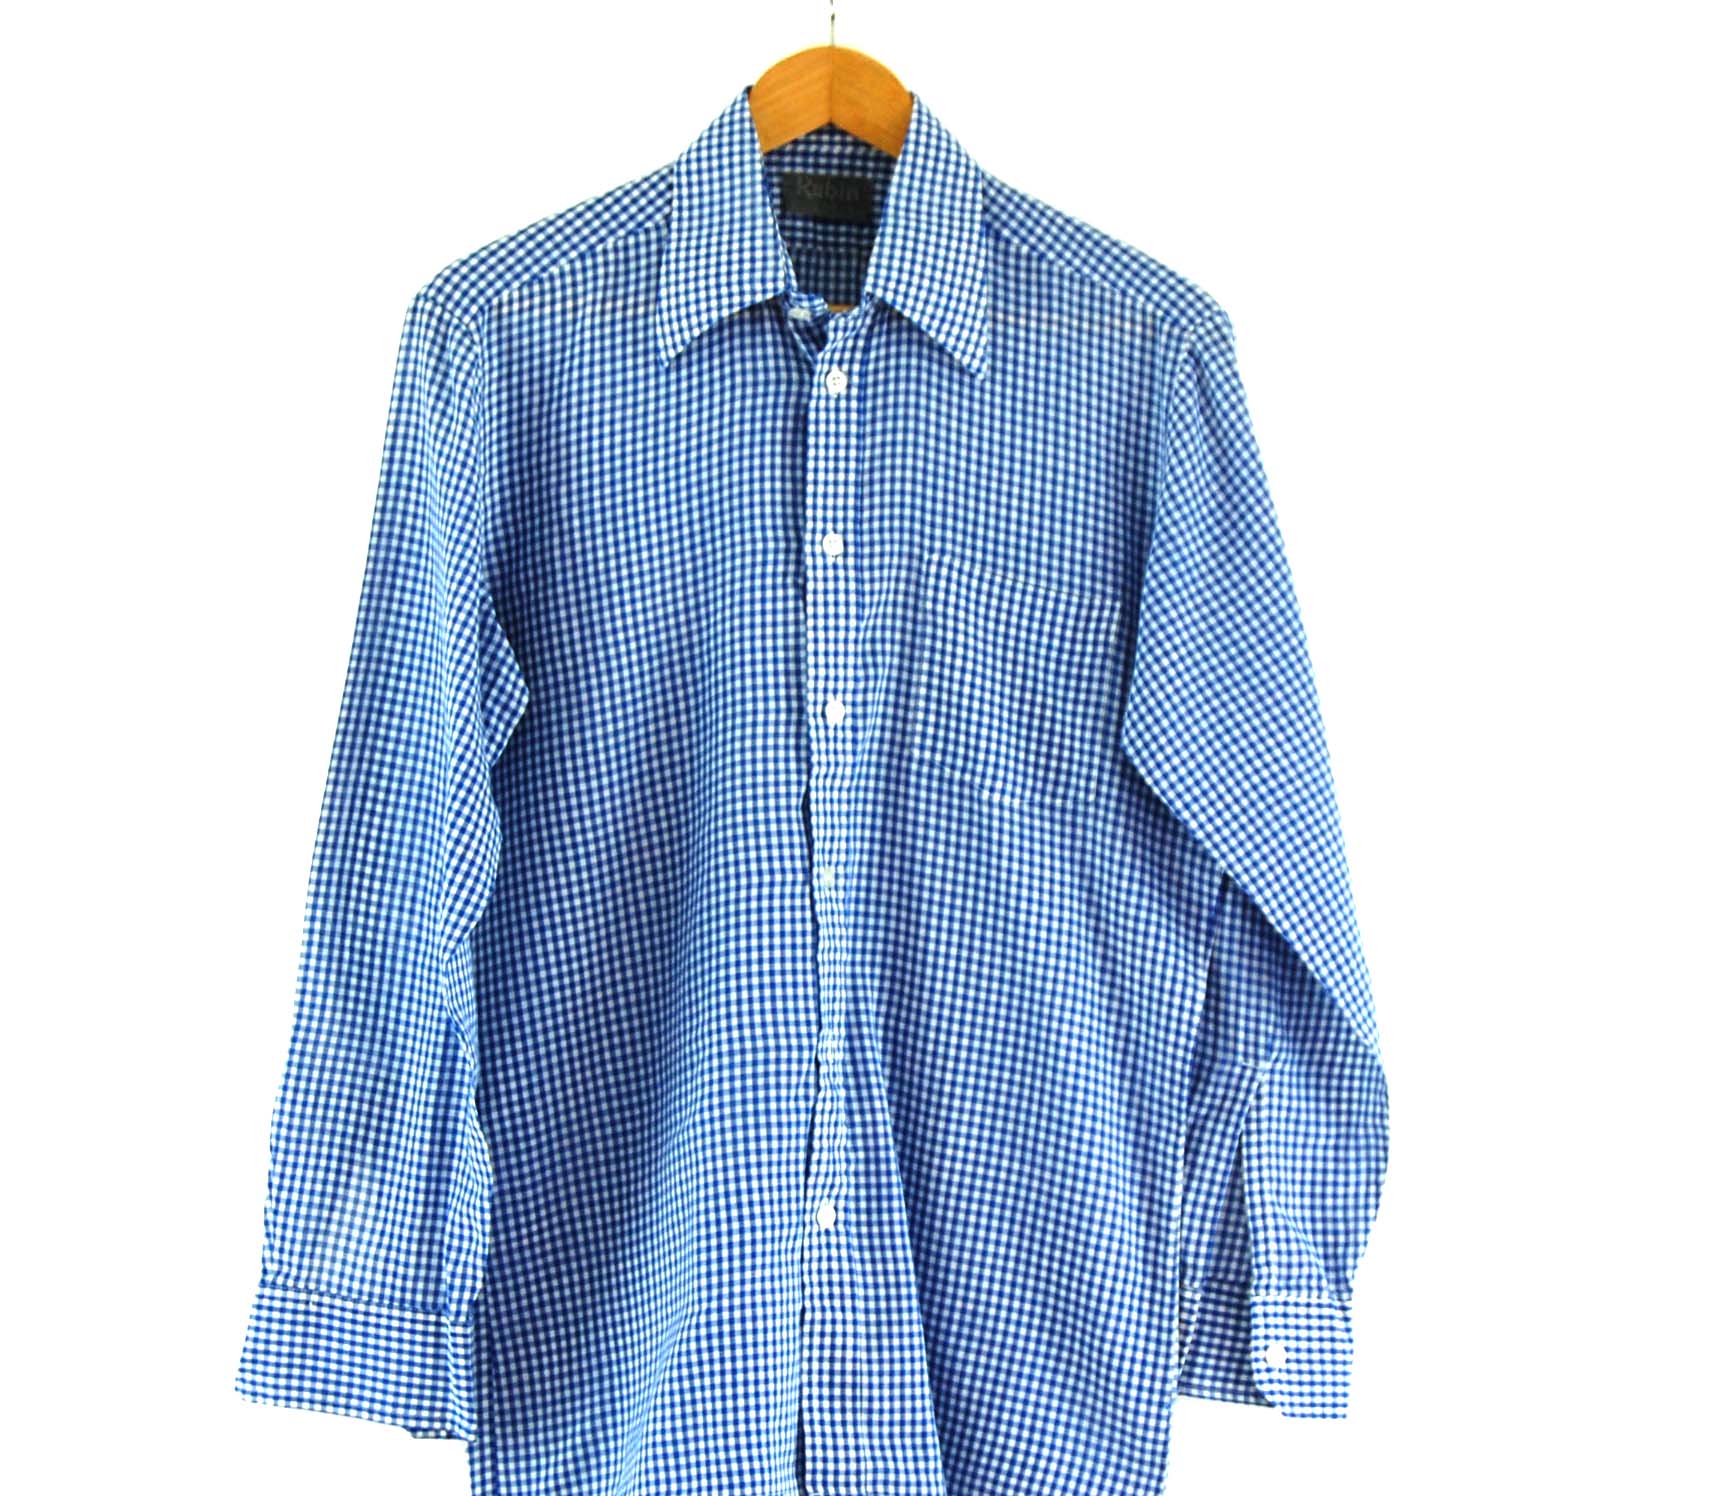 Blue and White Gingham Shirt - UK L - Blue 17 Vintage Clothing